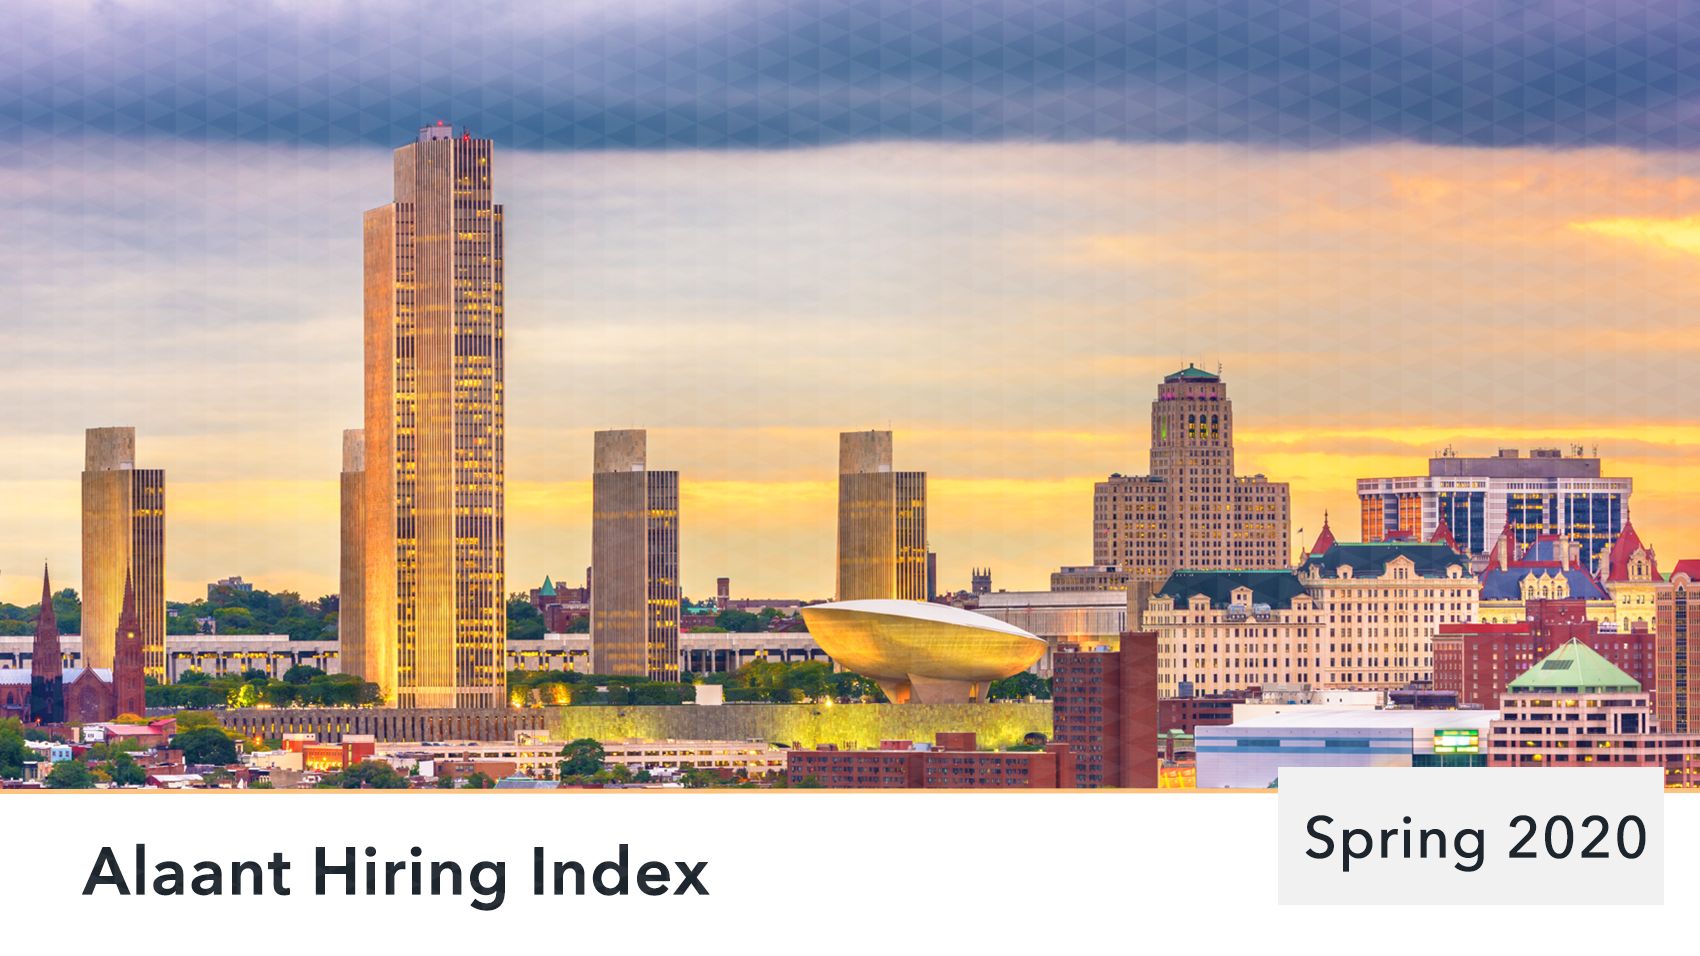 Alaant Hiring Index: Spring 2020